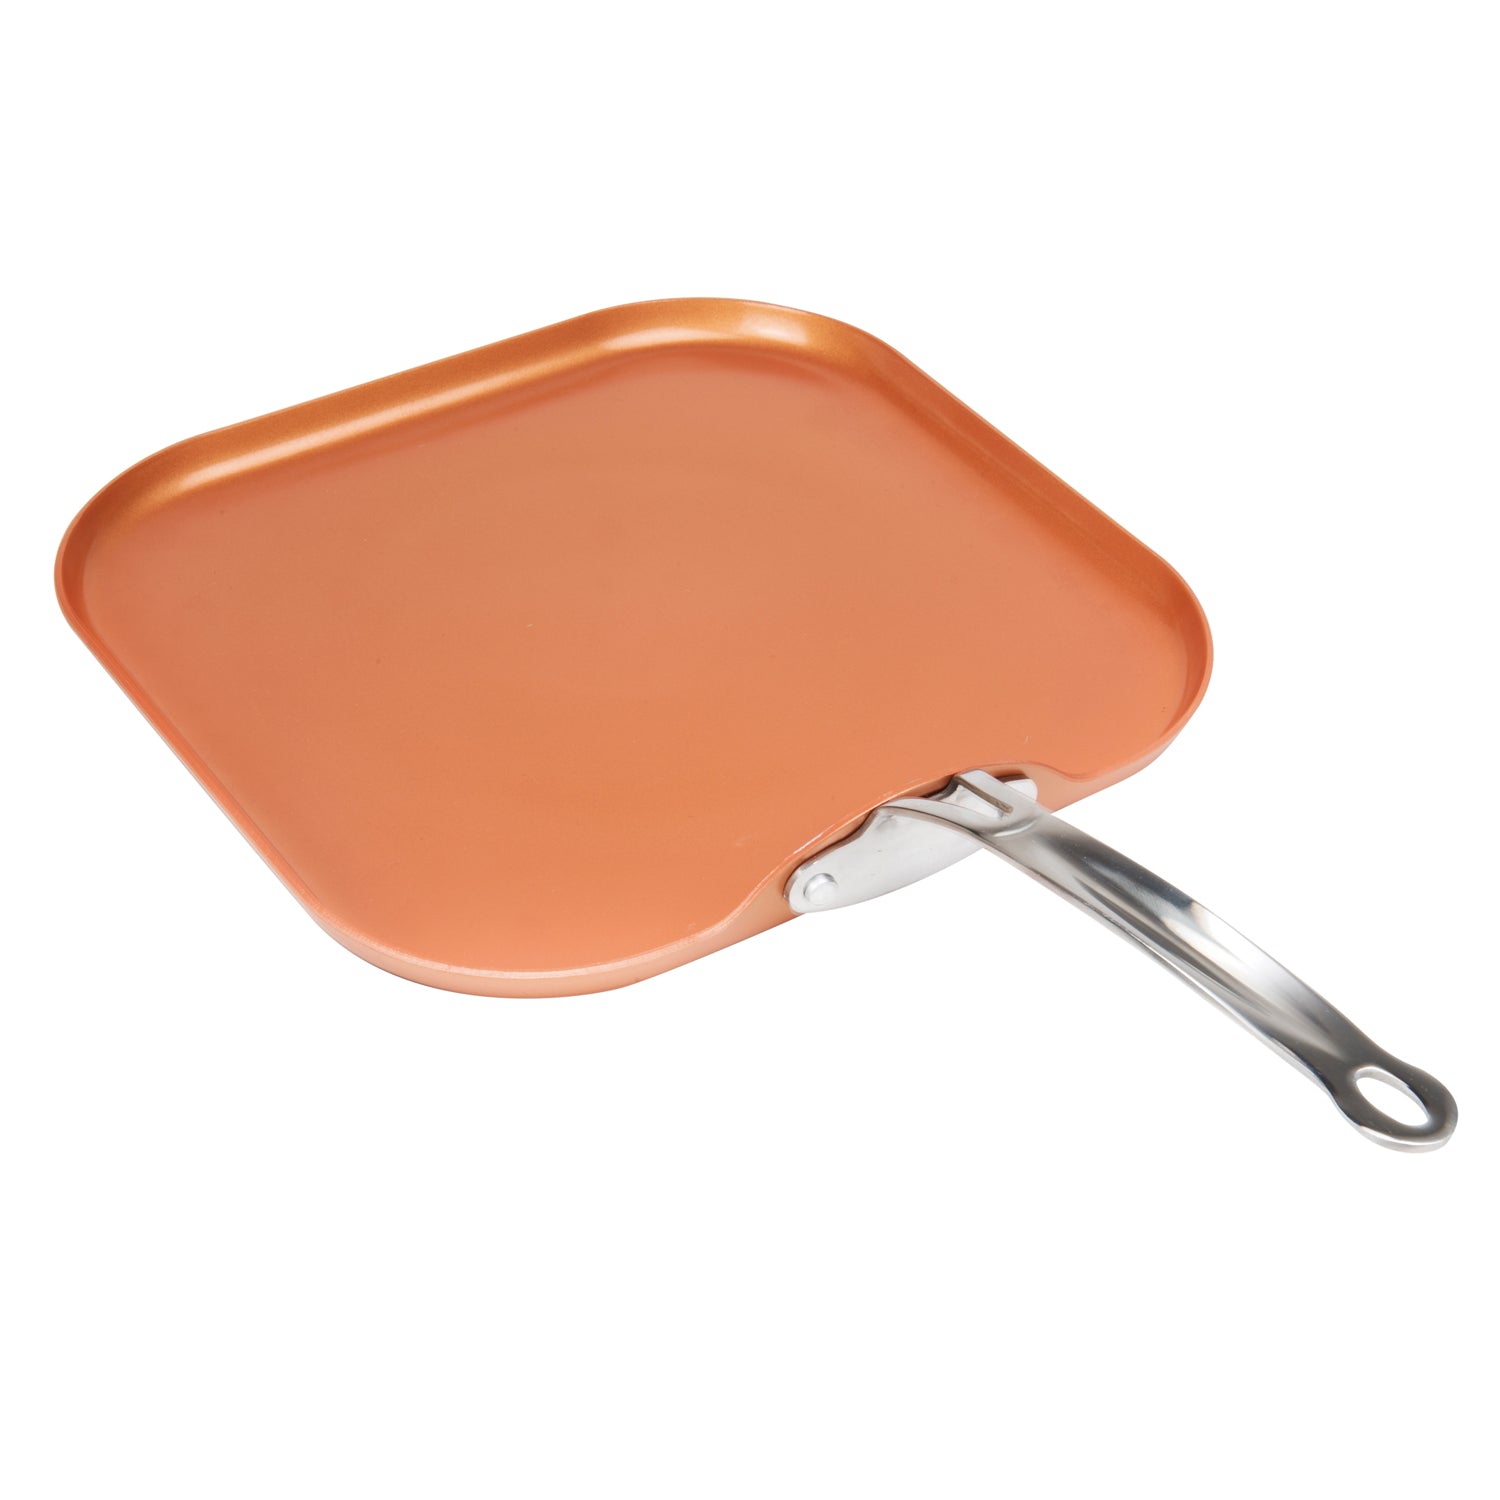 MasterPan Original Copper 11 Non-Stick Griddle Pan